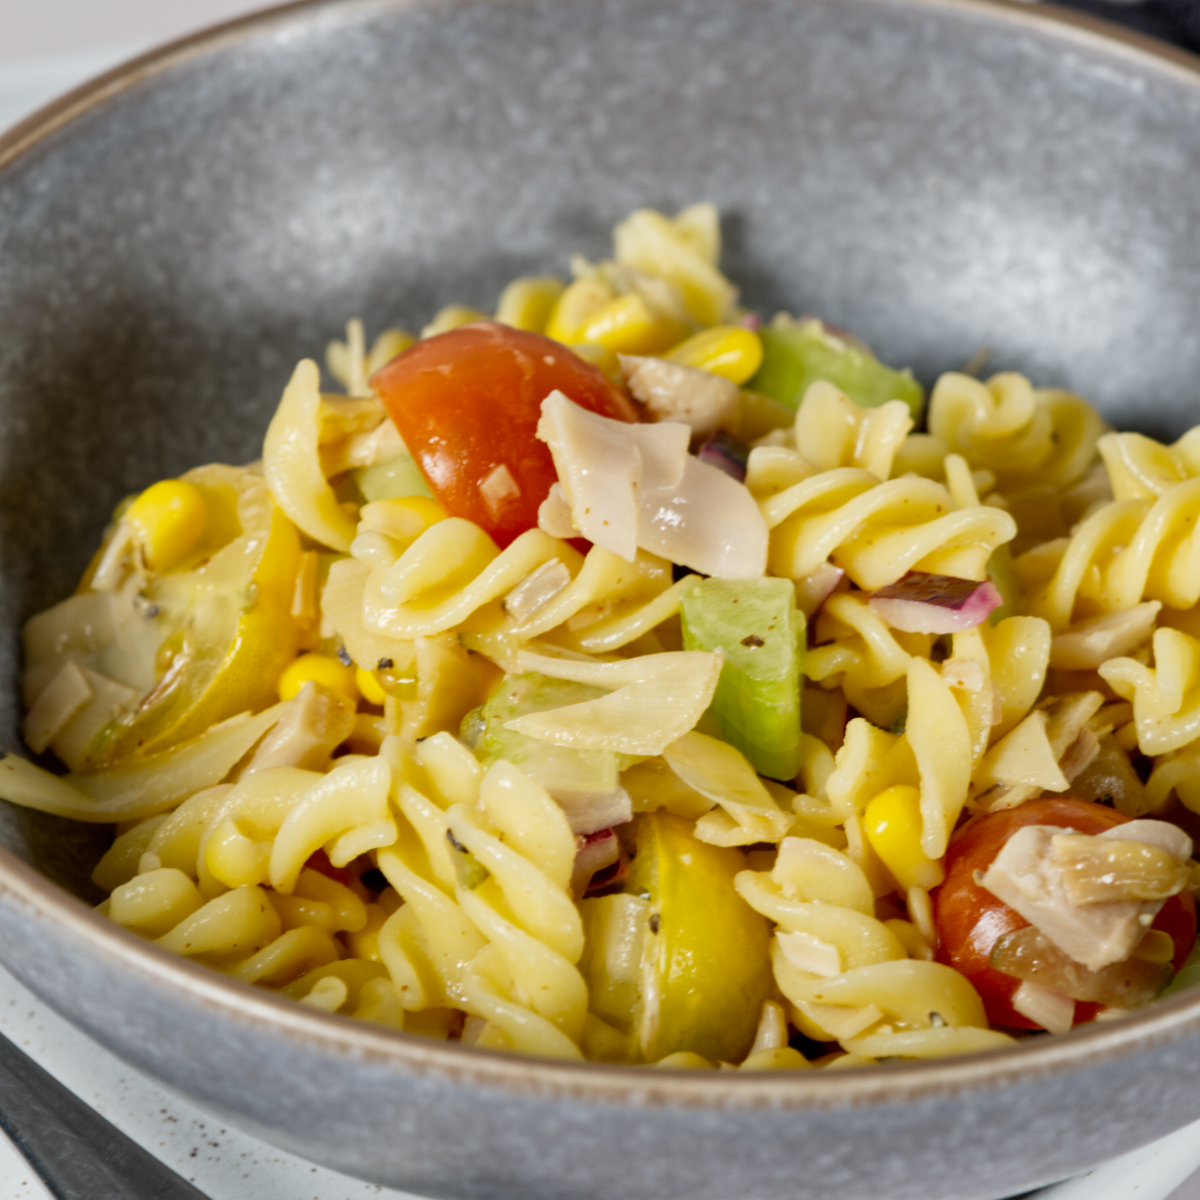 vegan pasta salad in a grey bowl